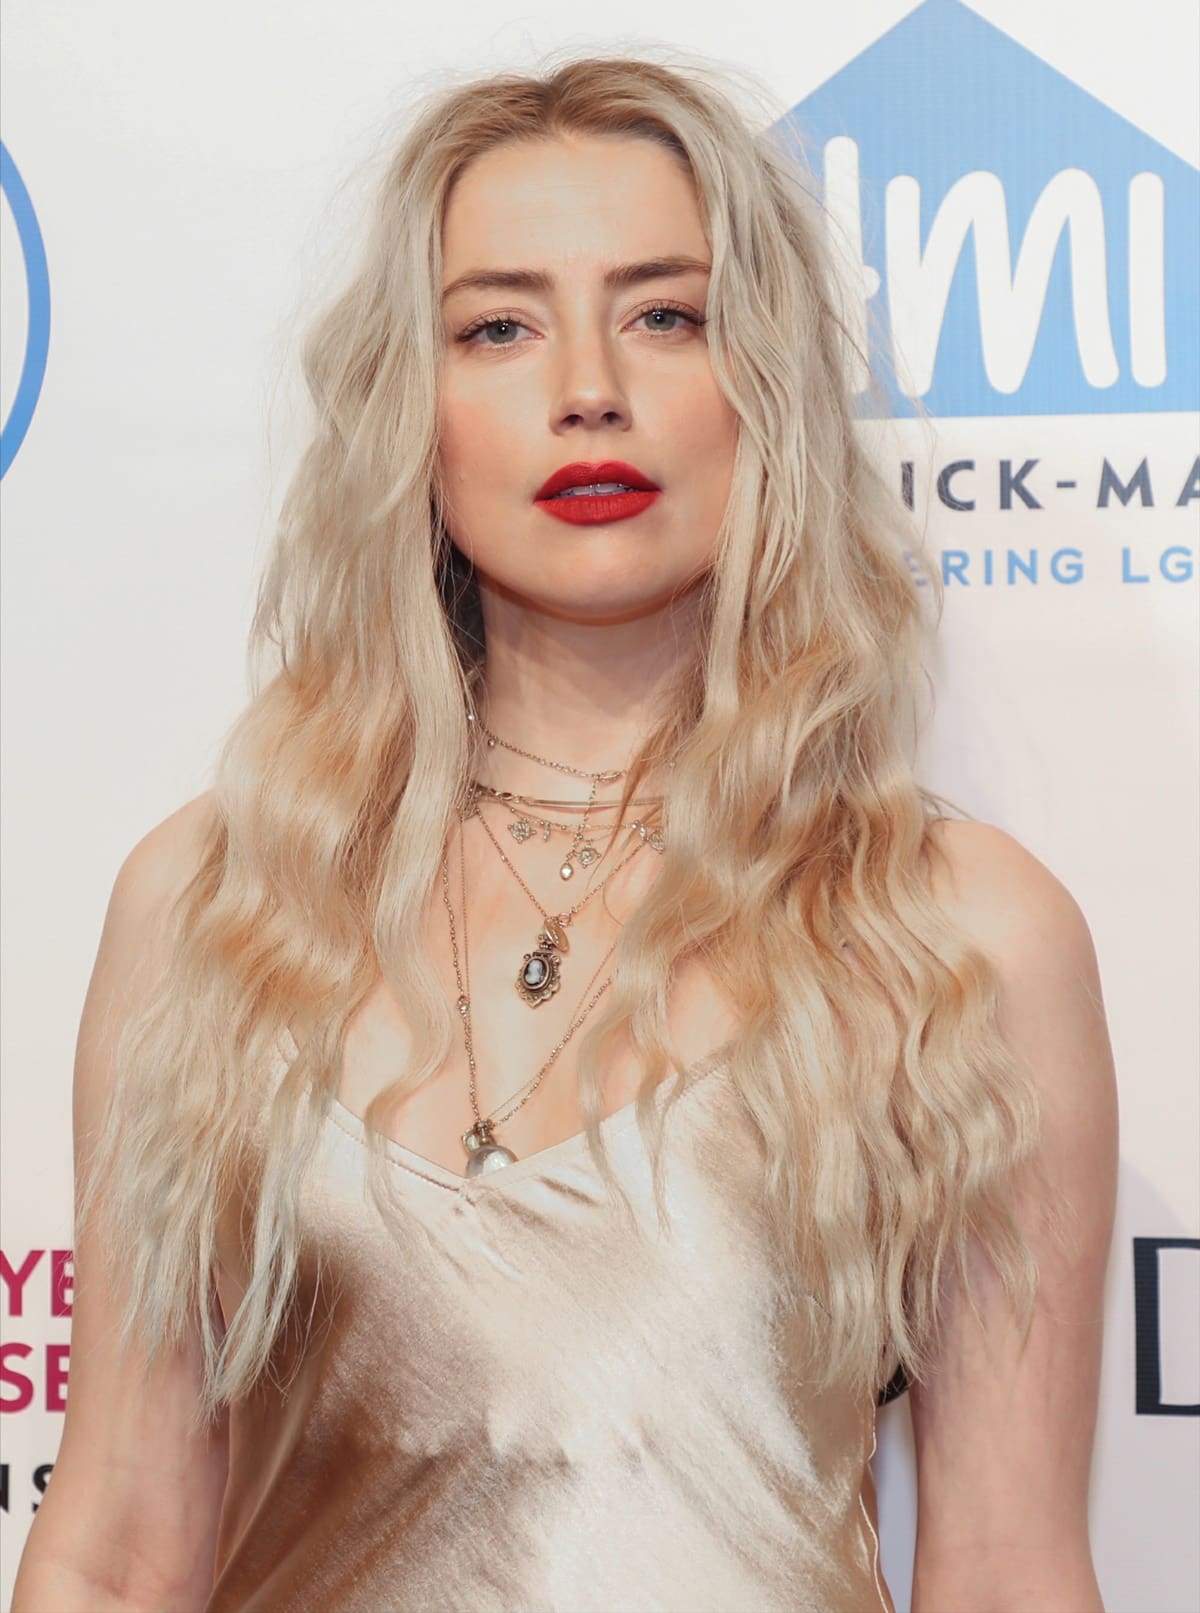 Broke Amber Heard’s Net Worth Tanked After Johnny Depp Trial